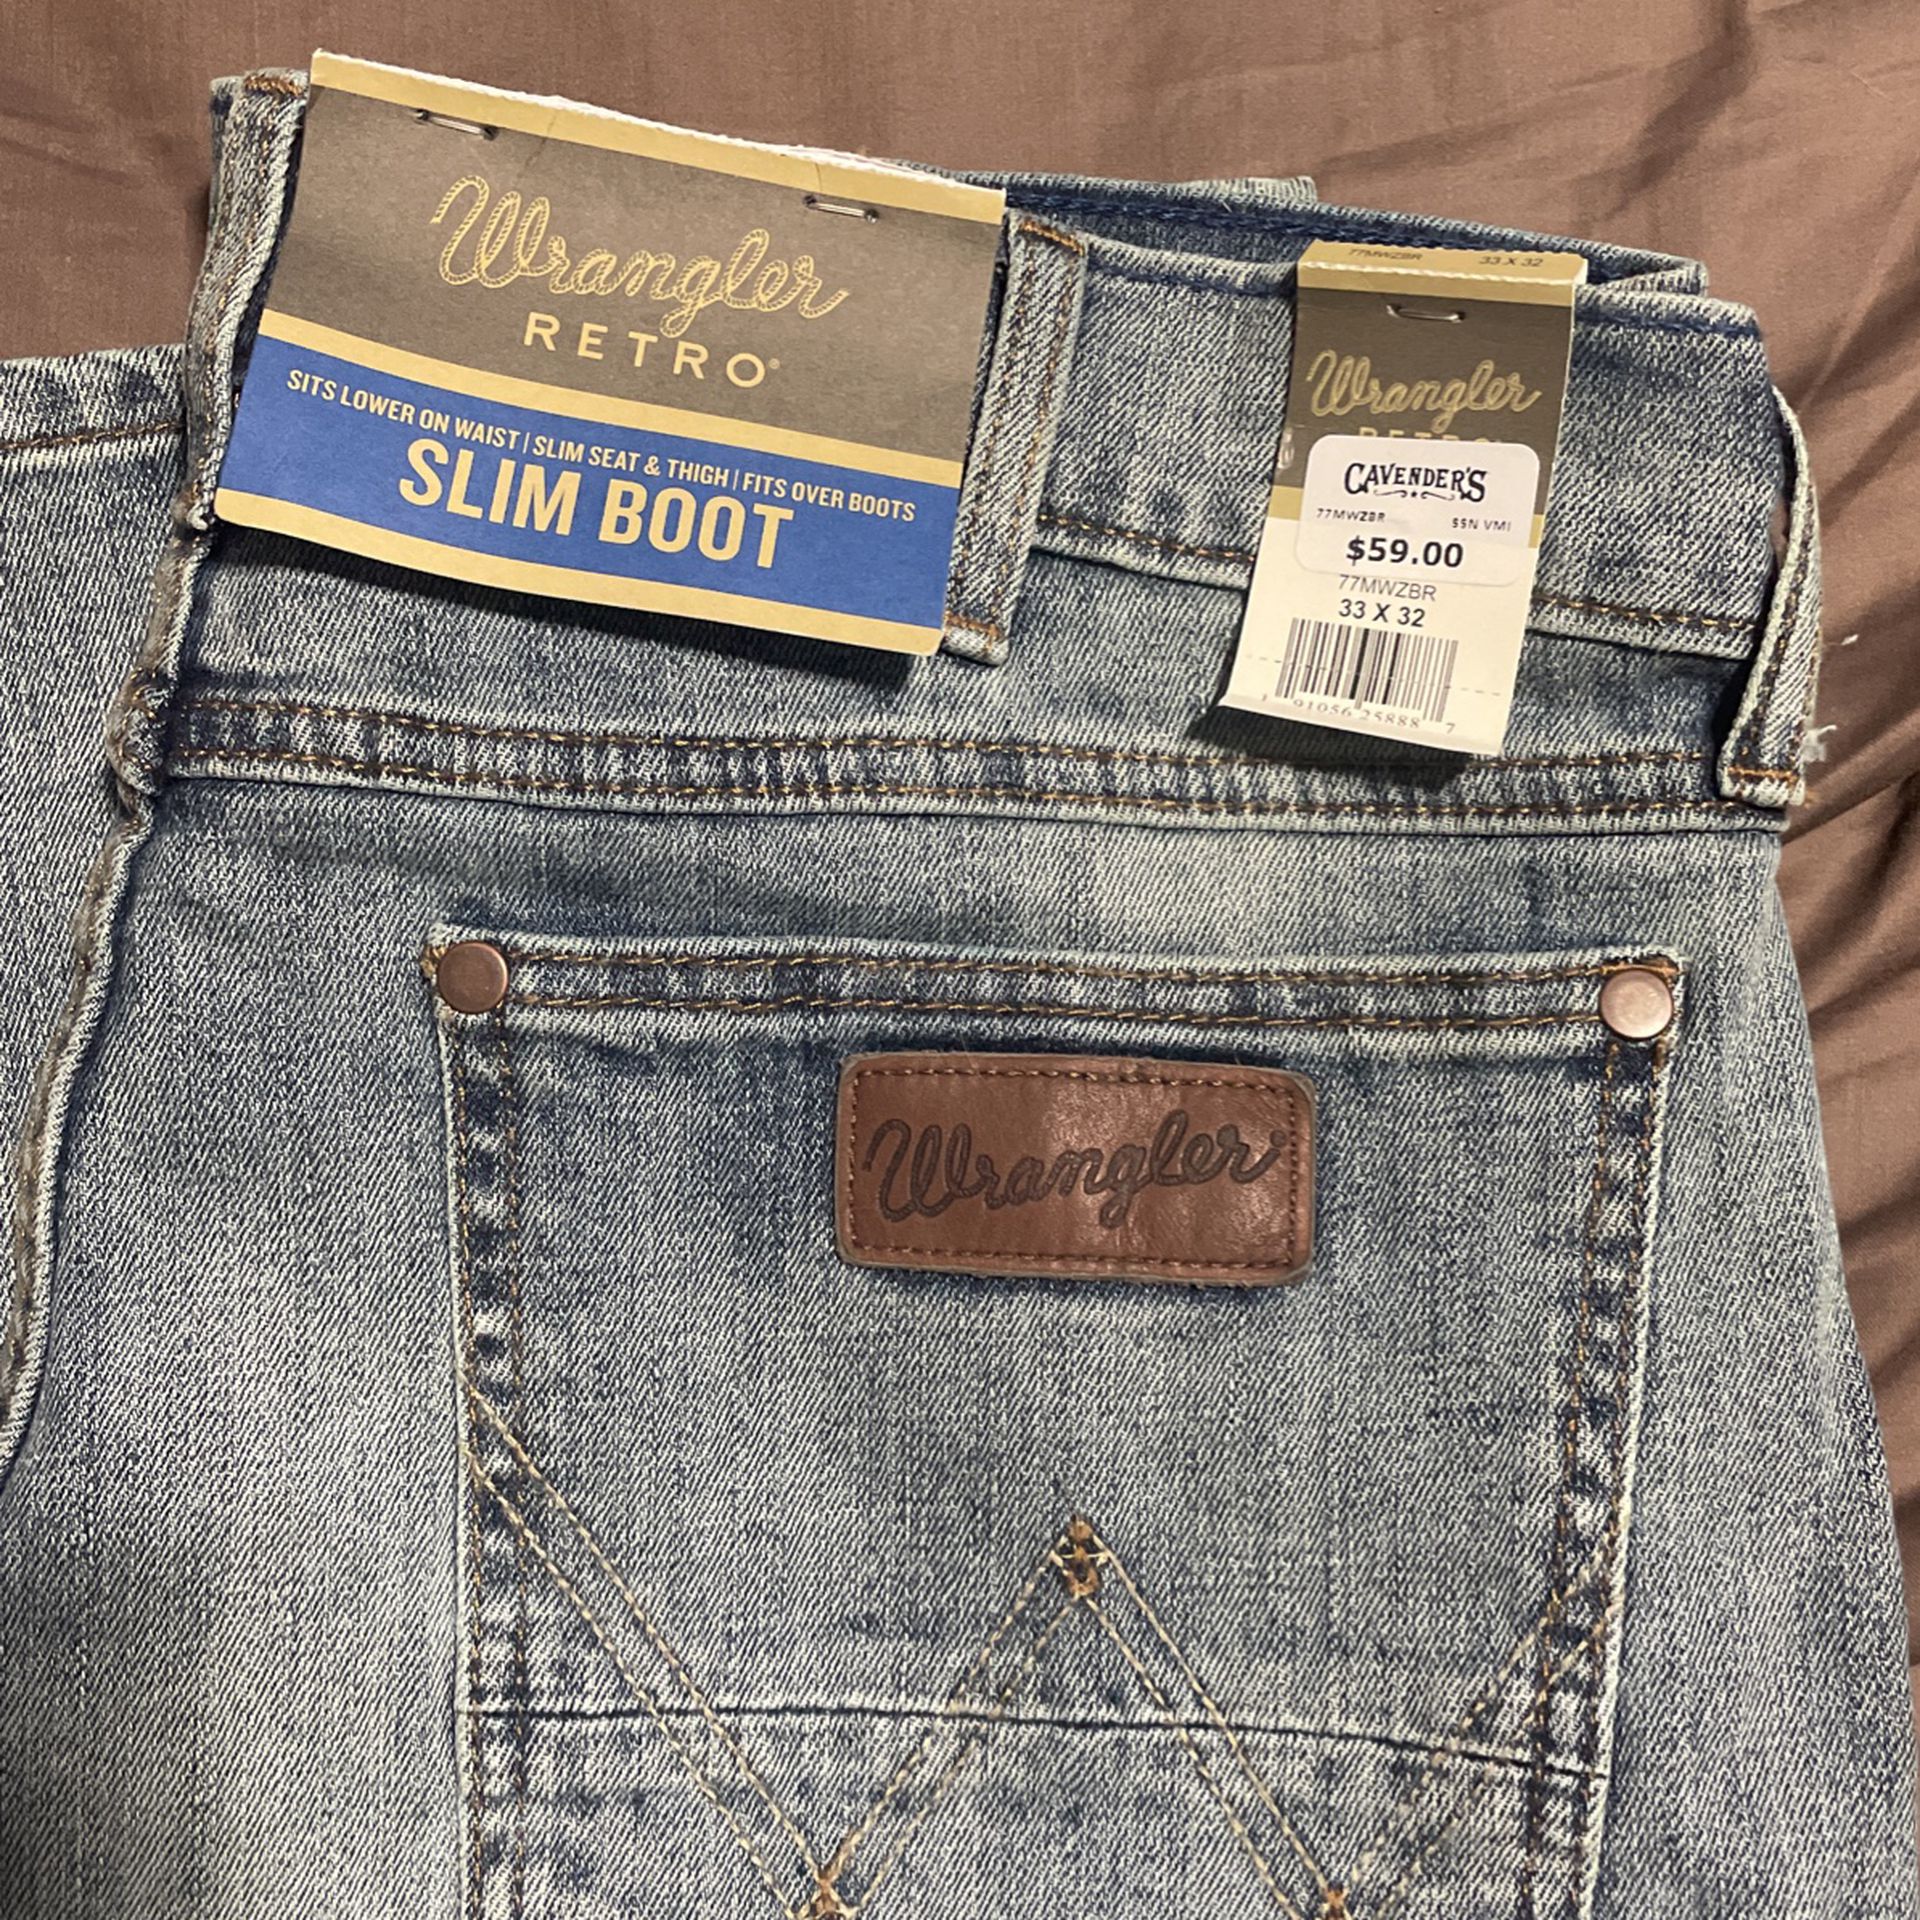 Wrangler Retro Slim Boot Cut Jeans for Sale in San Antonio, TX - OfferUp